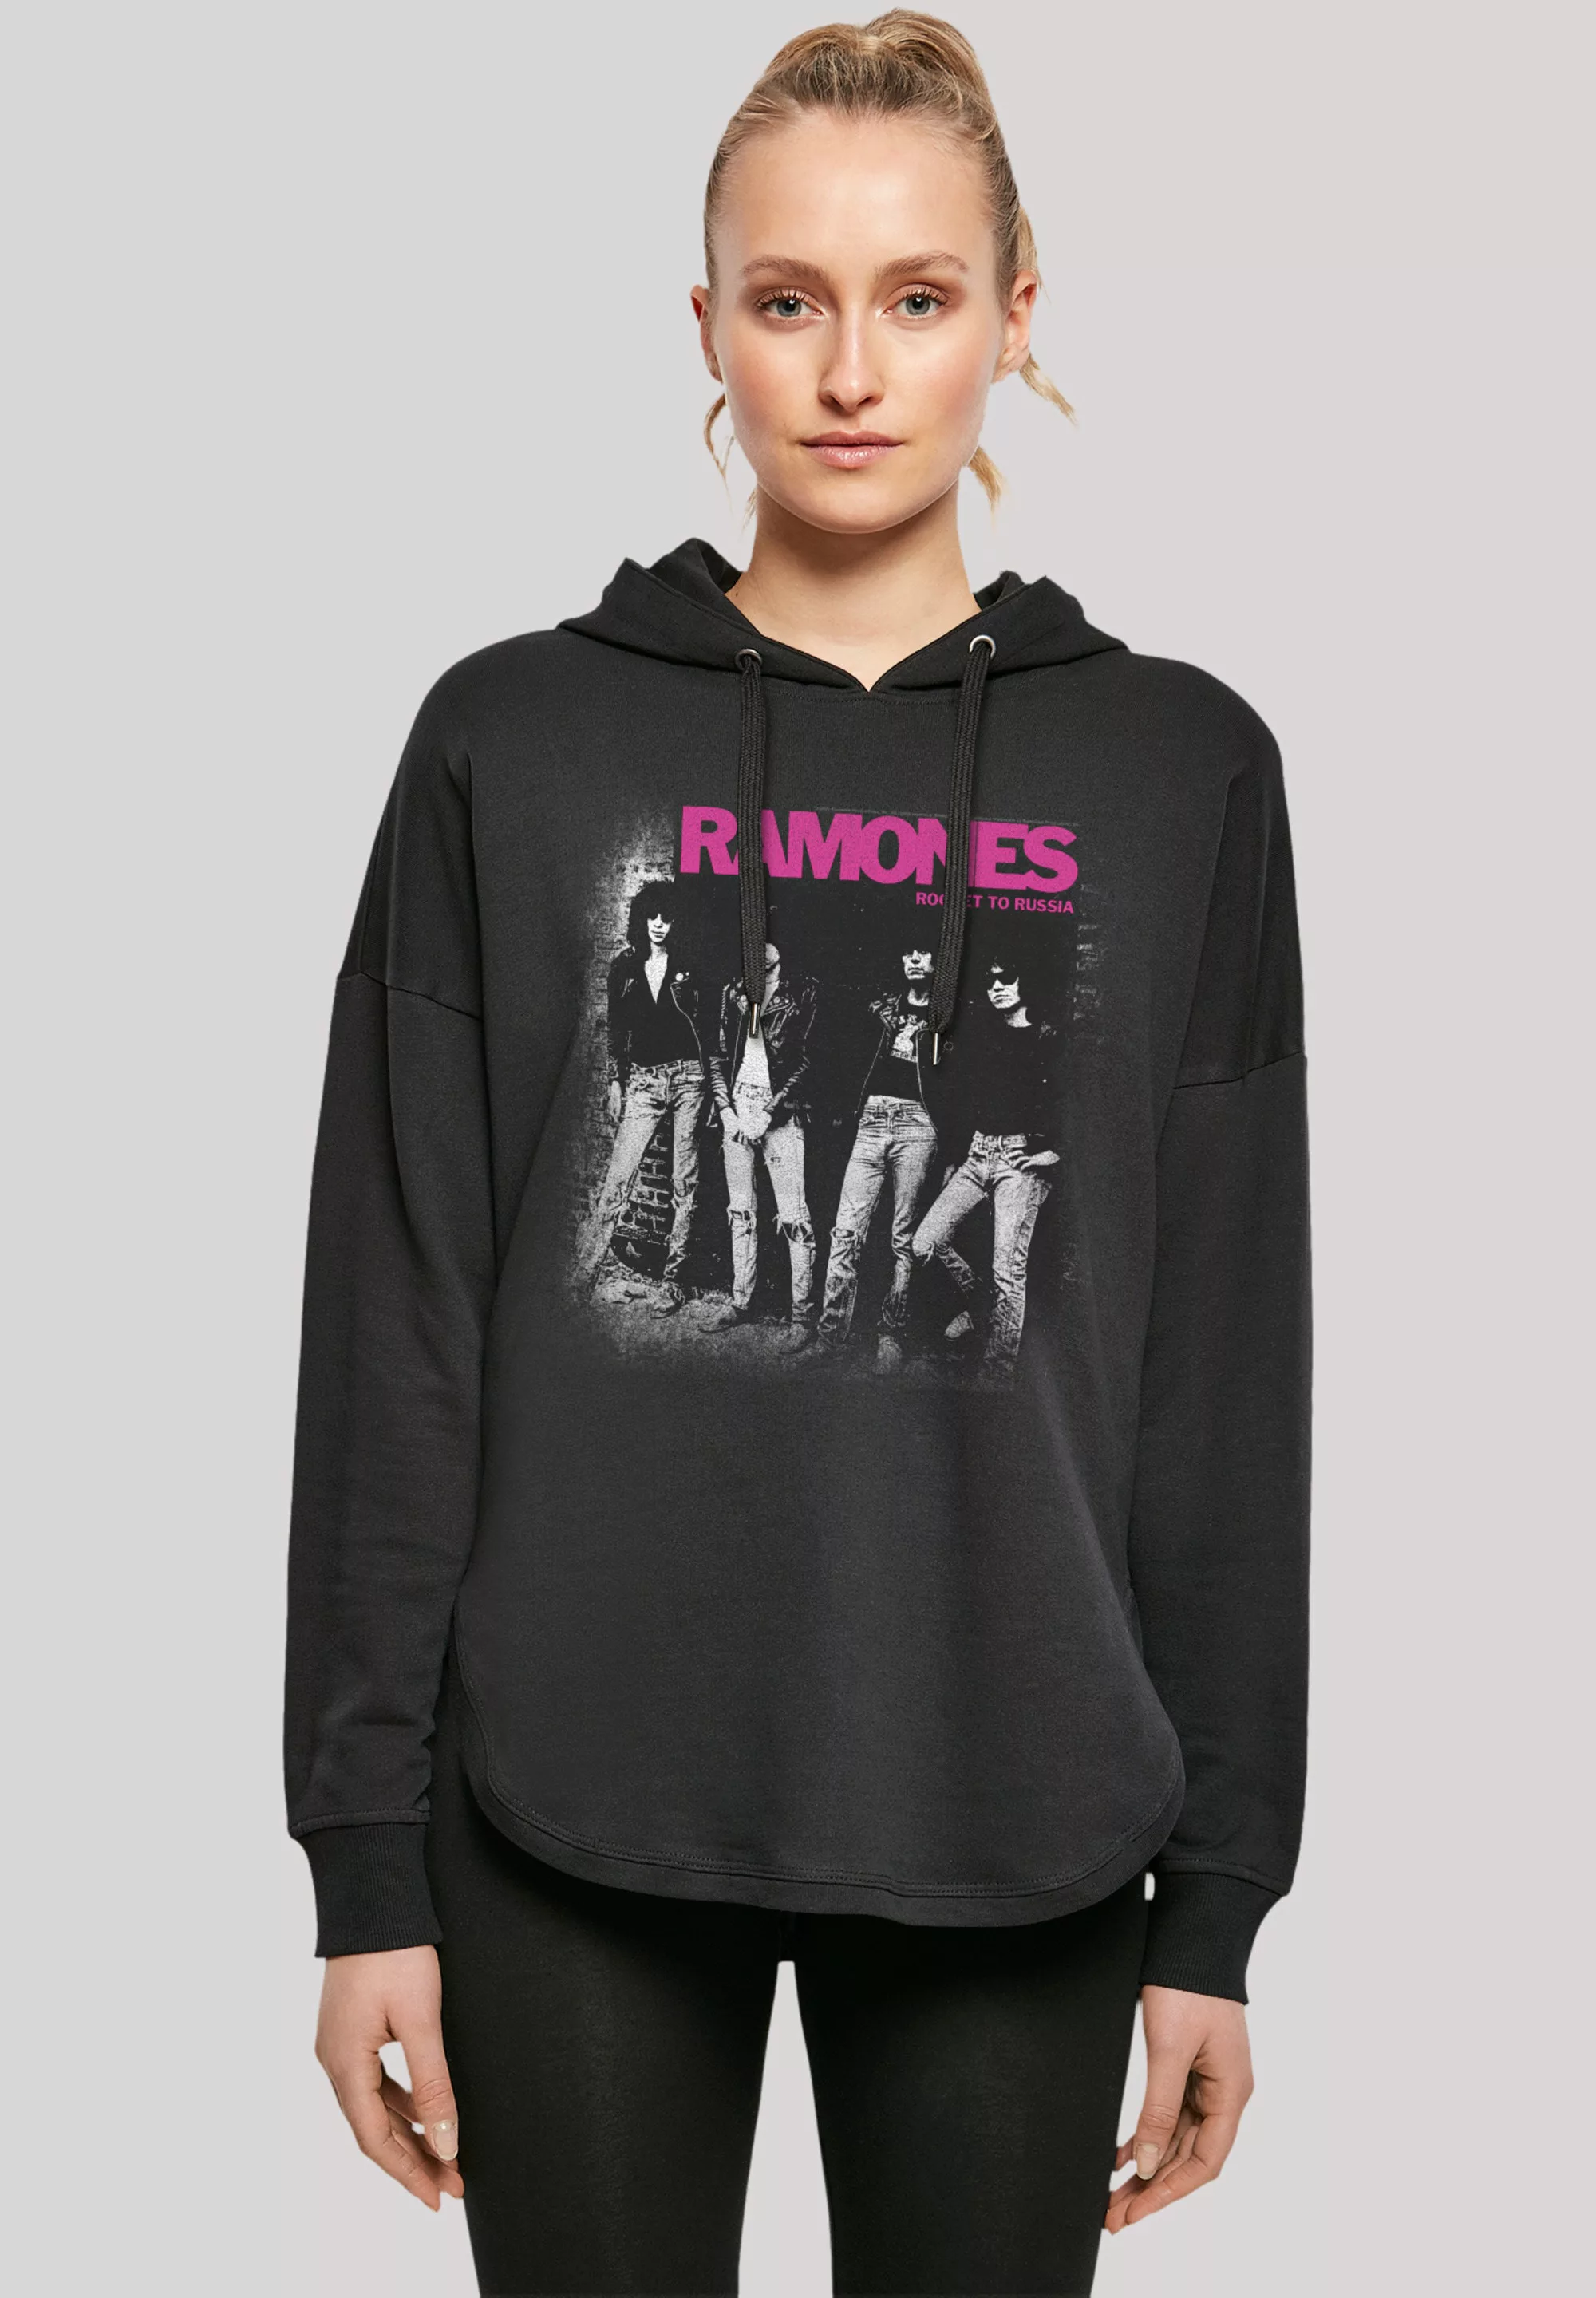 F4NT4STIC Sweatshirt "Ramones Rock Musik Band Rocket To Russia Faded", Prem günstig online kaufen